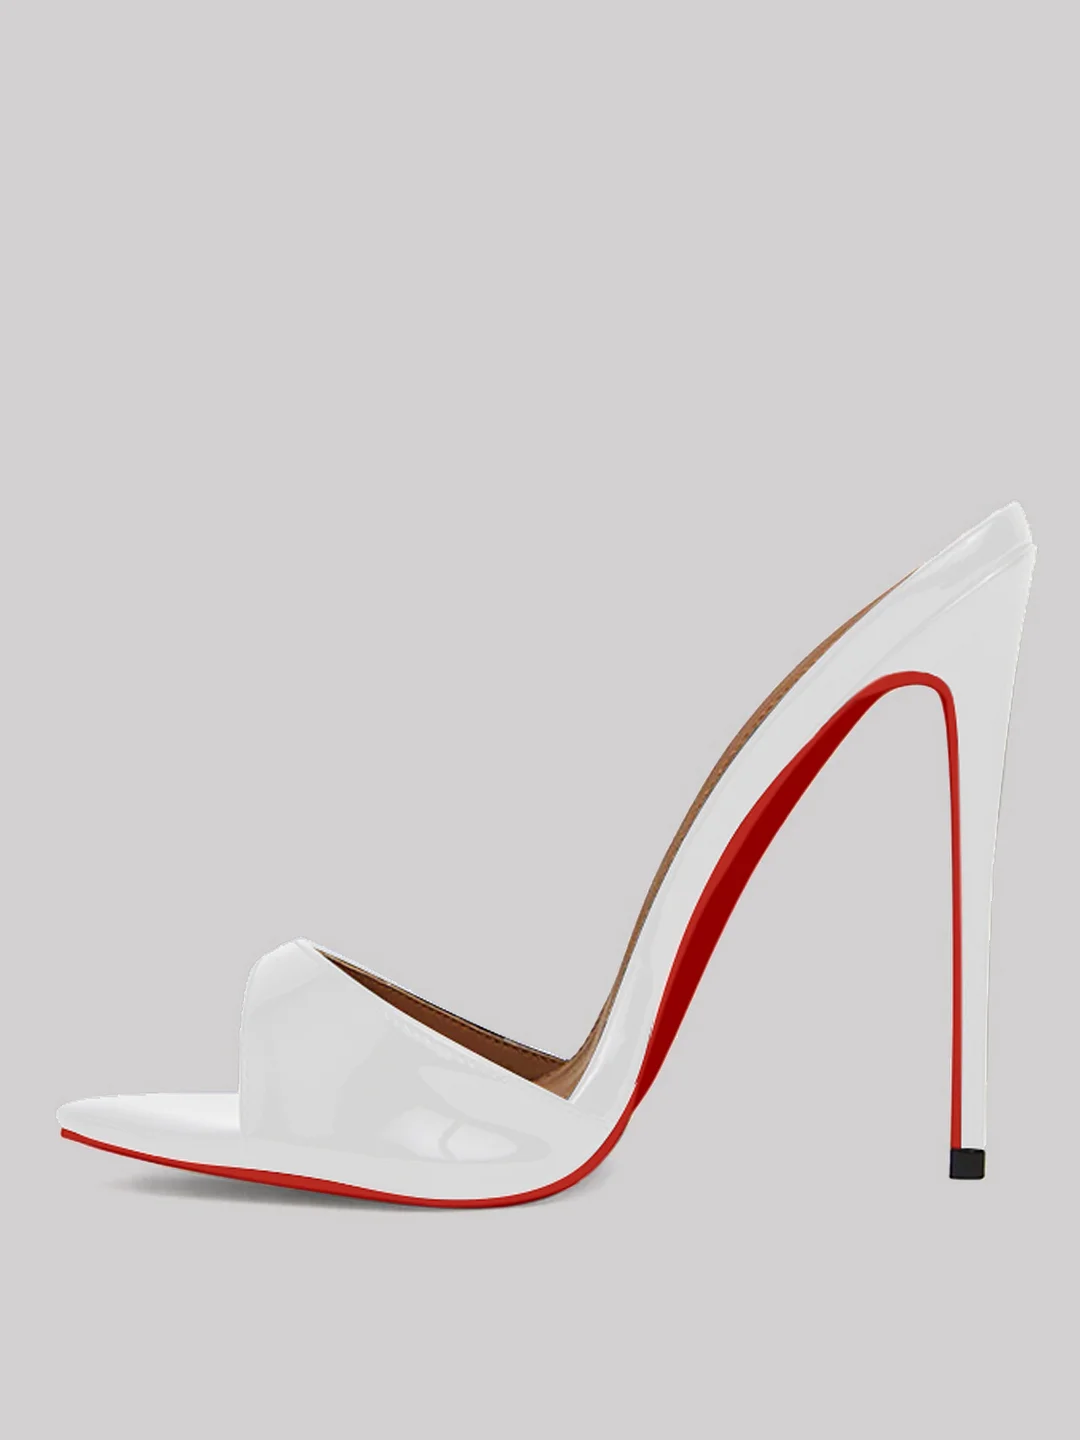 120mm Women's Open Toe Sandals Stiletto Red Bottom High Heels Vegan Mules Patent Shoes